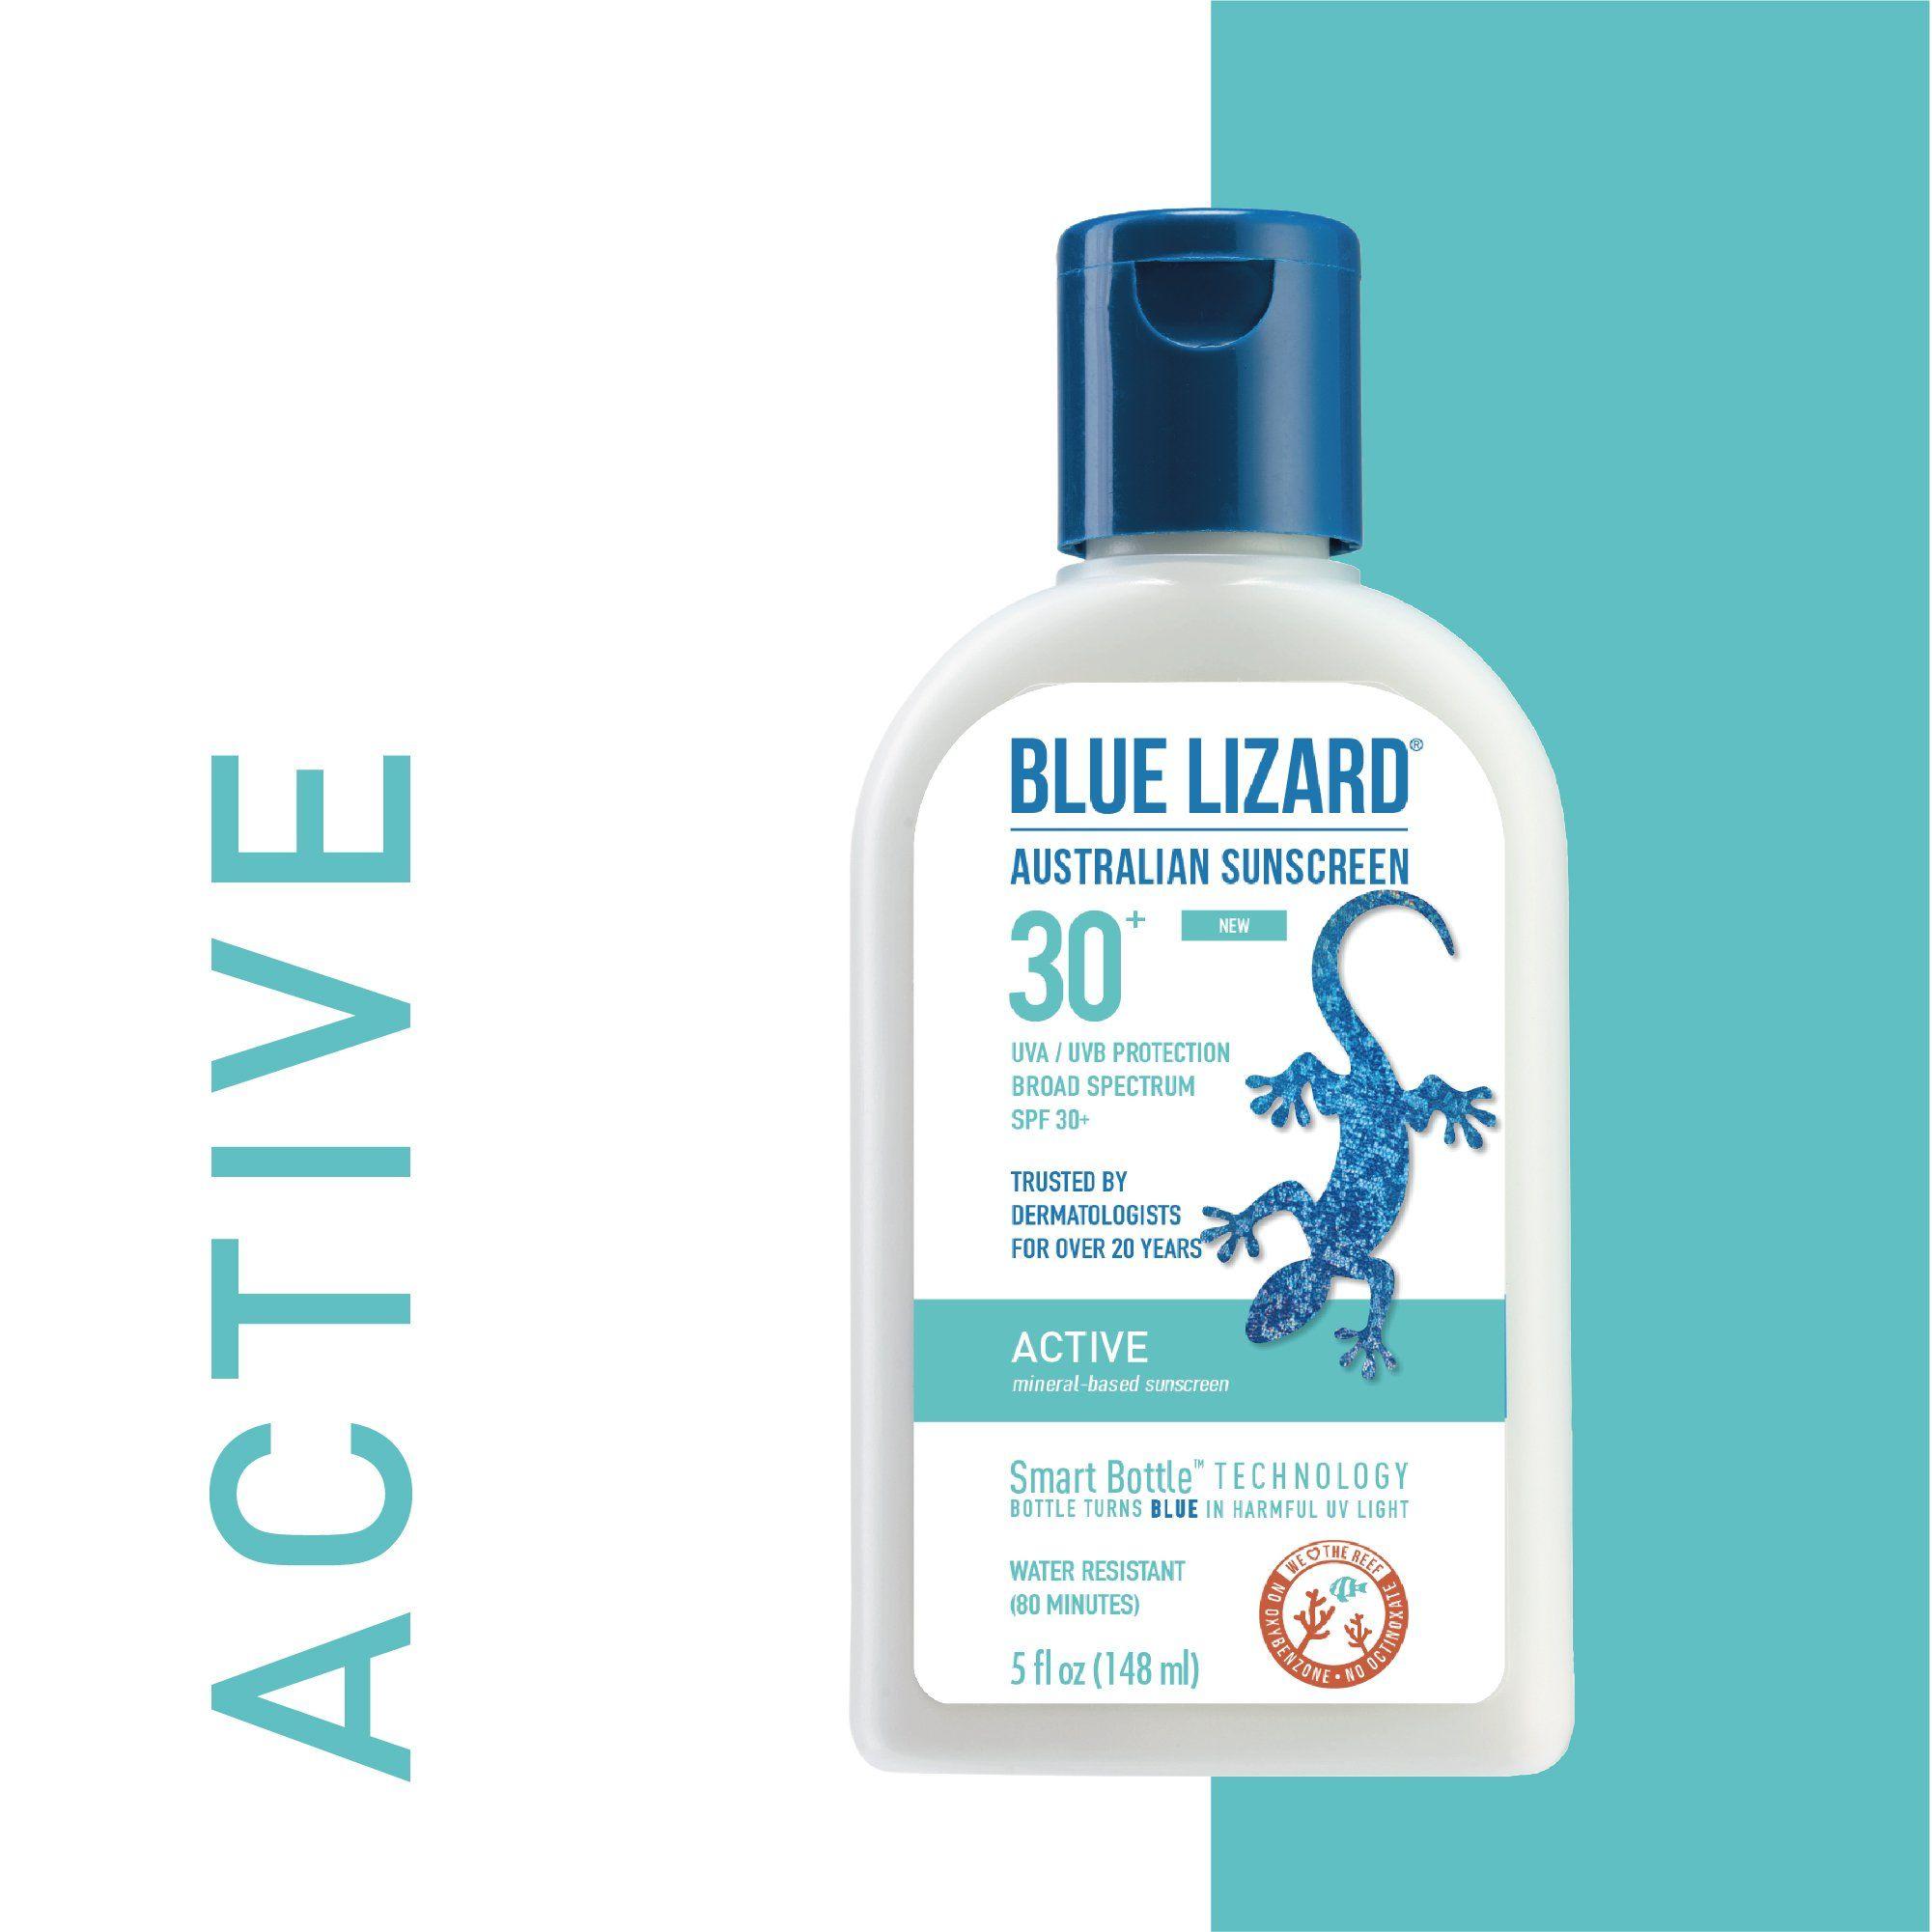 kem chống nắng cho bà bầu 2020-Blue Lizard Australian Sunscreen For Sensitive Skin SPF 30+